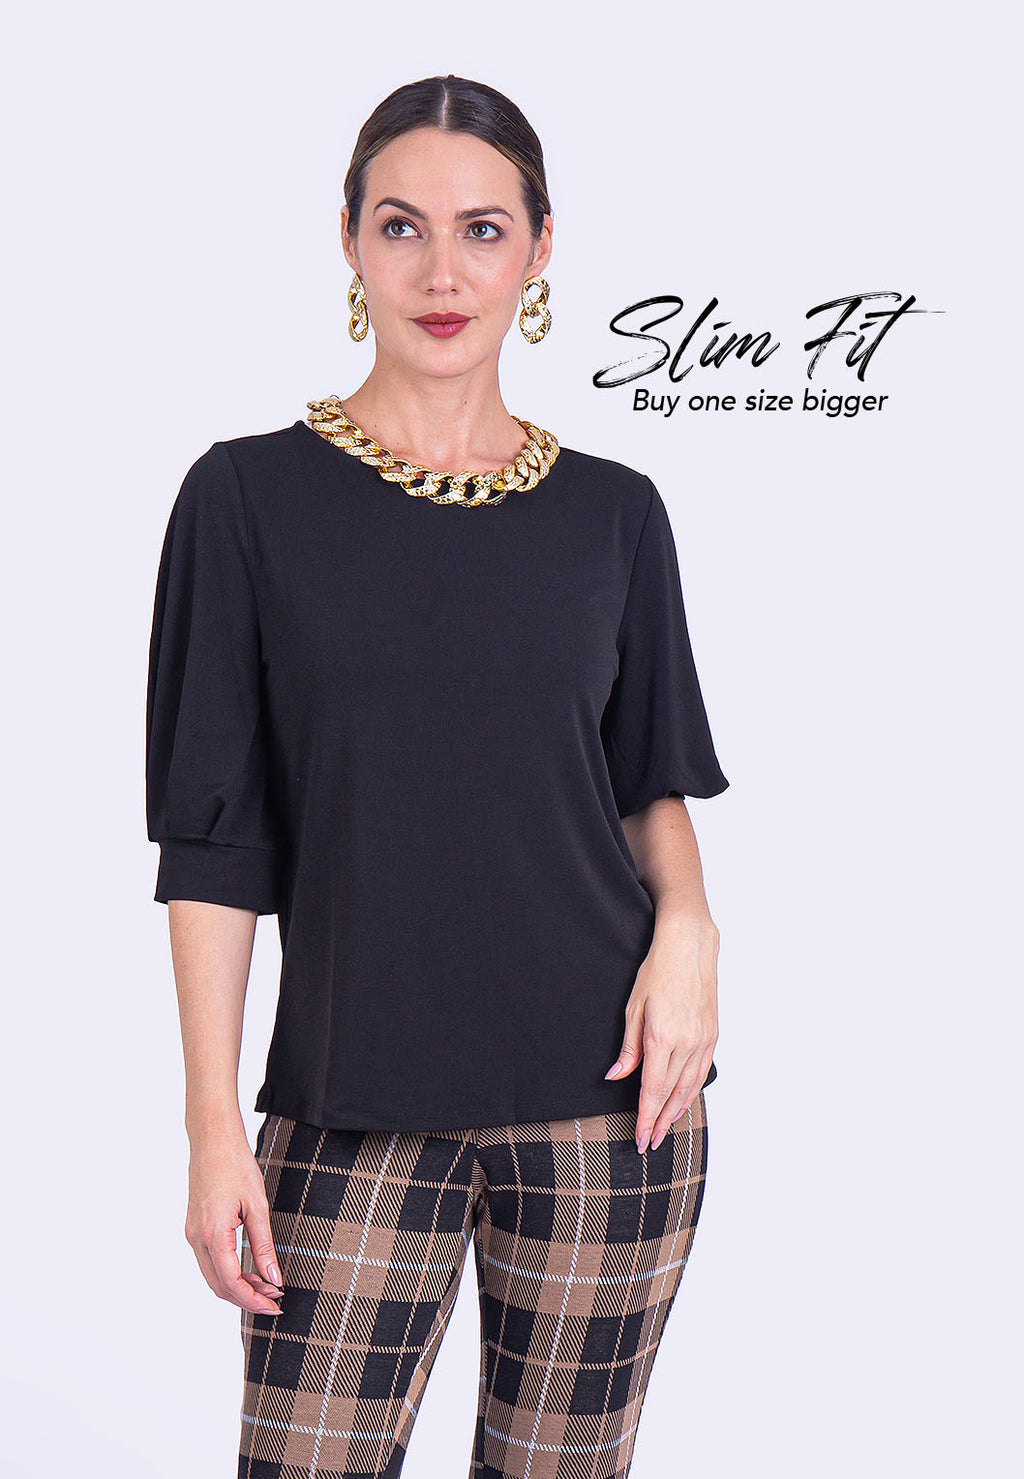 fashion bpc bonprix collection women 3/4 sleeve shirt top size M, 057WM1T01